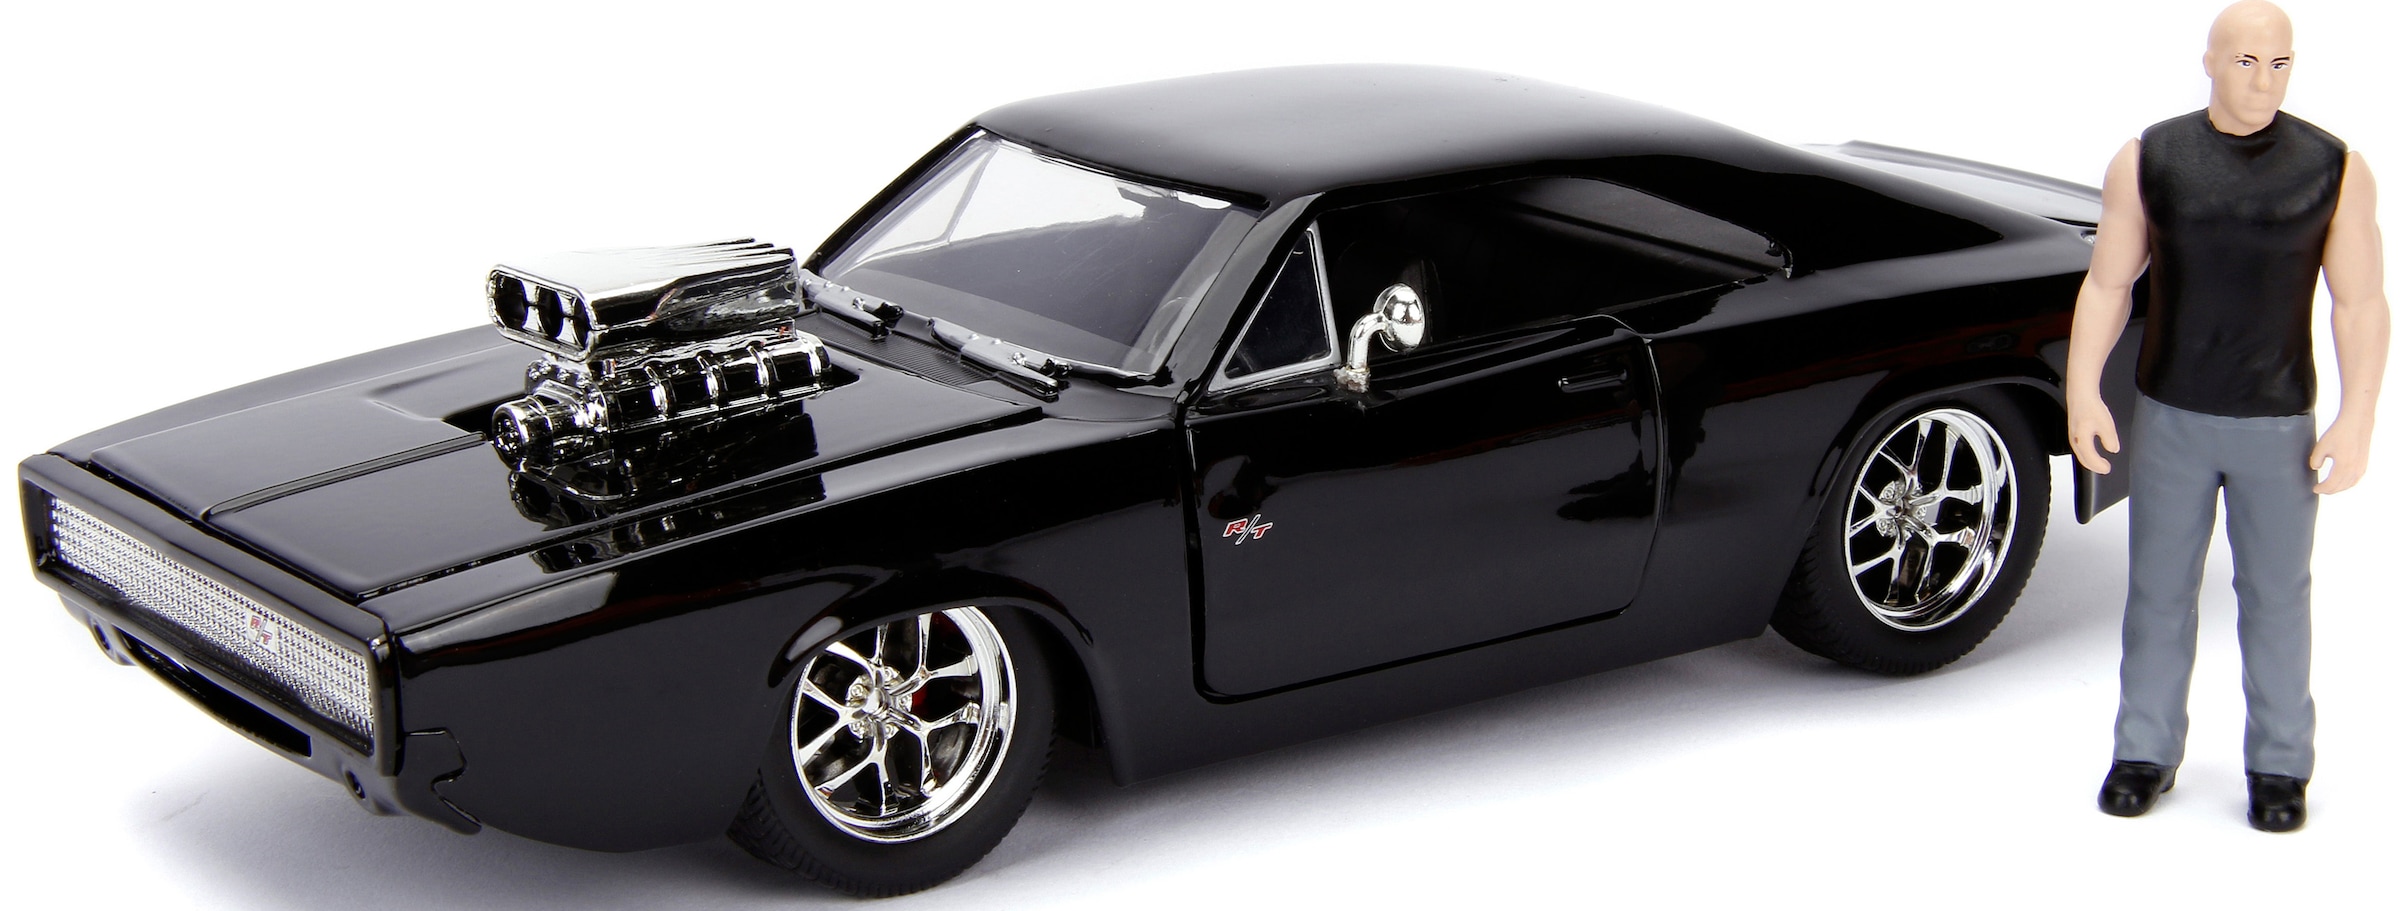 JADA Spielzeug-Auto »Fast & Furious, Dodge Charger«